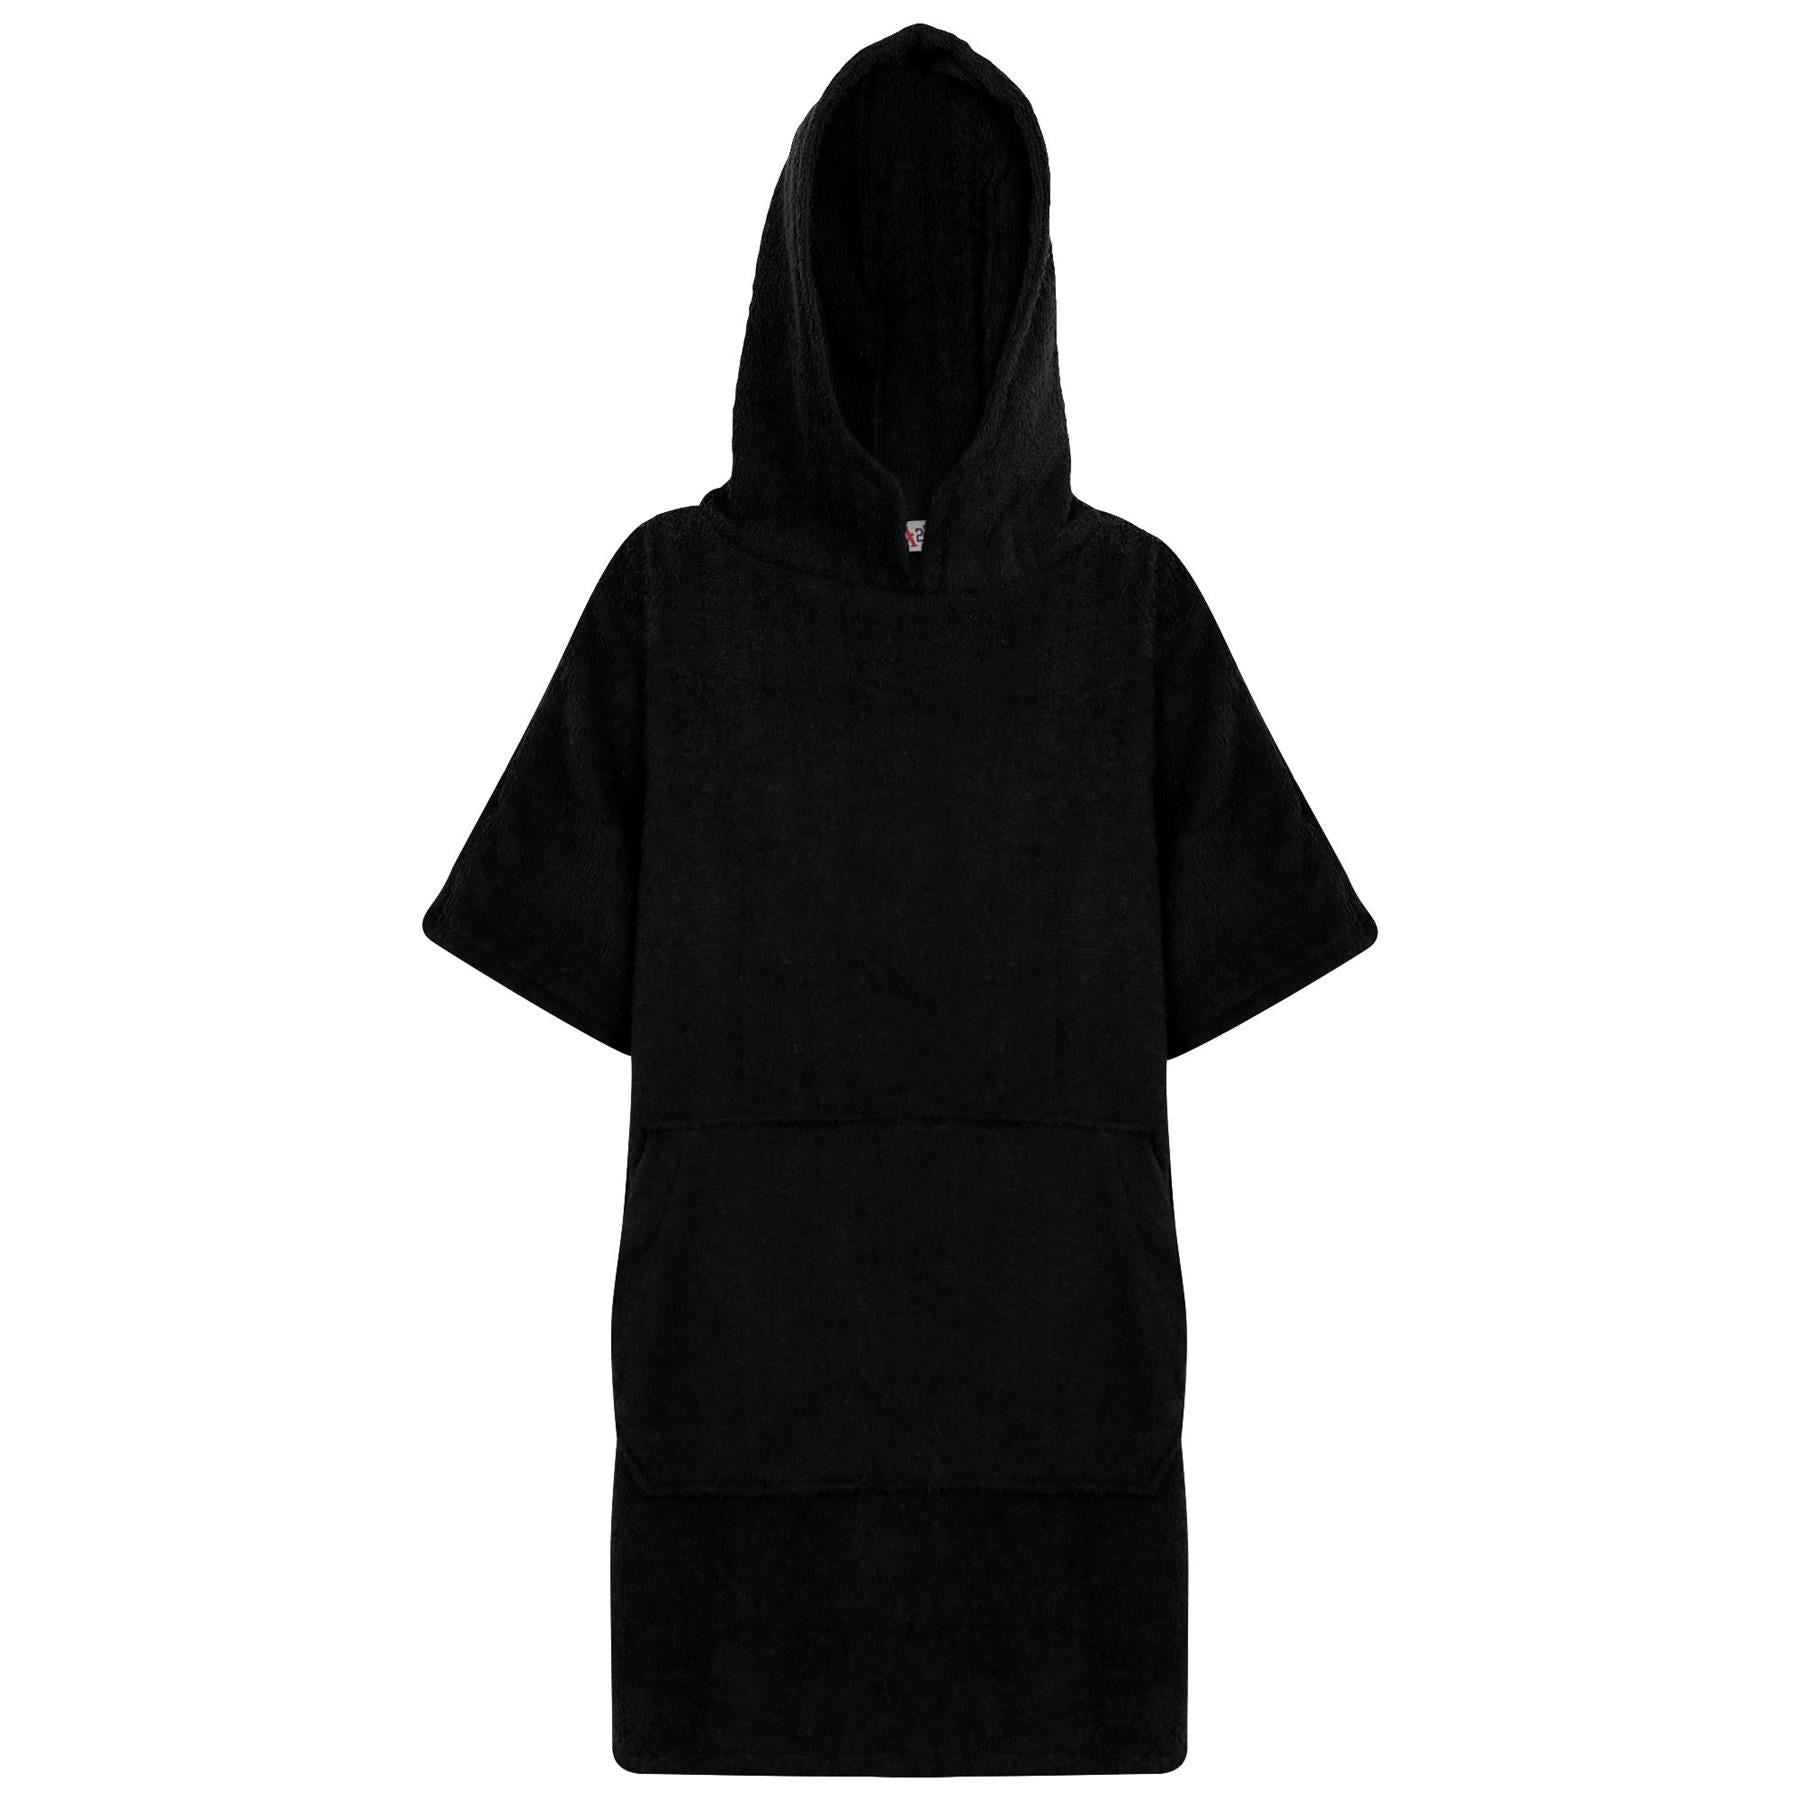 Kids Bathrobe 100% Cotton Black Hooded Bathing Dressing Gown Unisex 2-13 Y